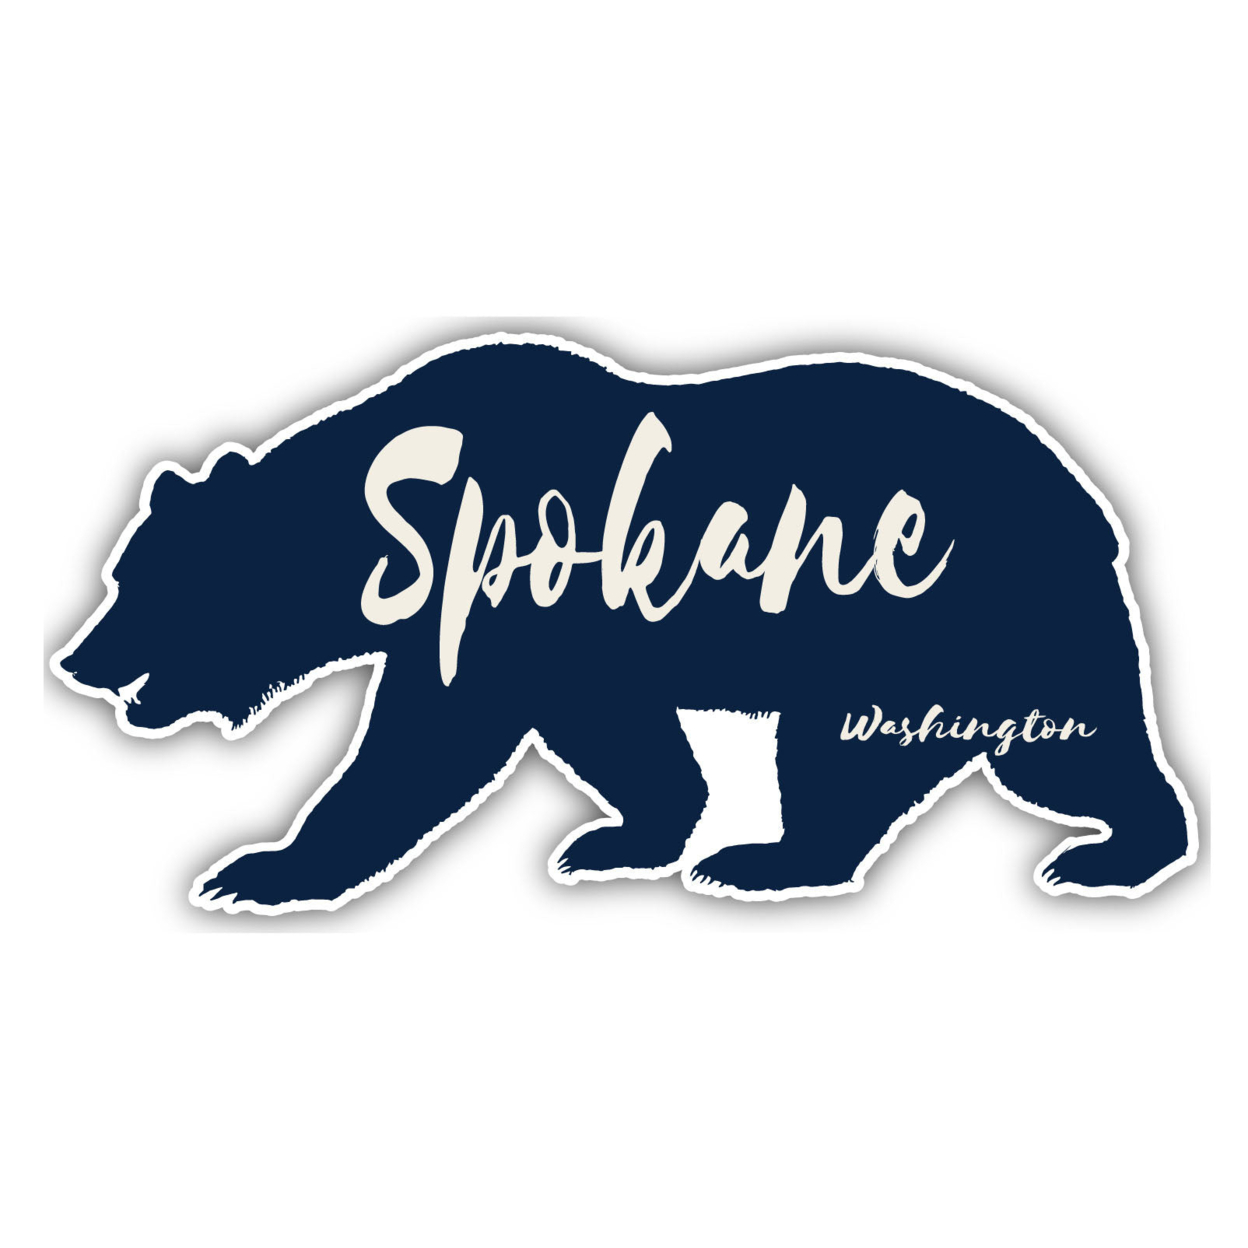 Spokane Washington Souvenir Decorative Stickers (Choose Theme And Size) - Single Unit, 4-Inch, Camp Life